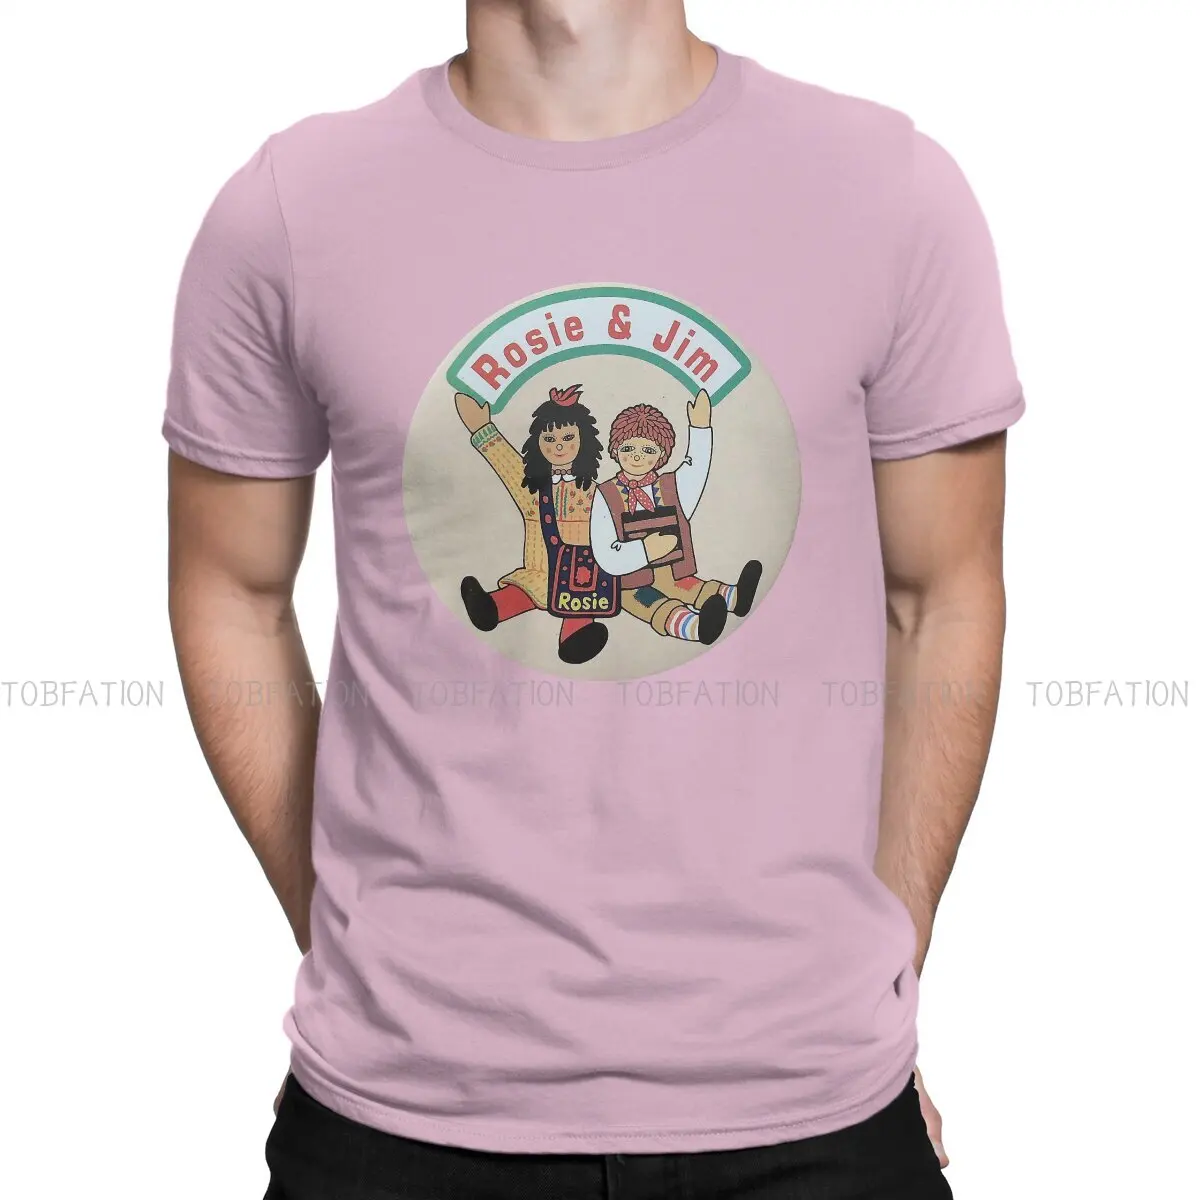 

Essential Unique TShirt Rosie and Jim Kids Childrens TV Comfortable New Design Graphic T Shirt Stuff Hot Sale